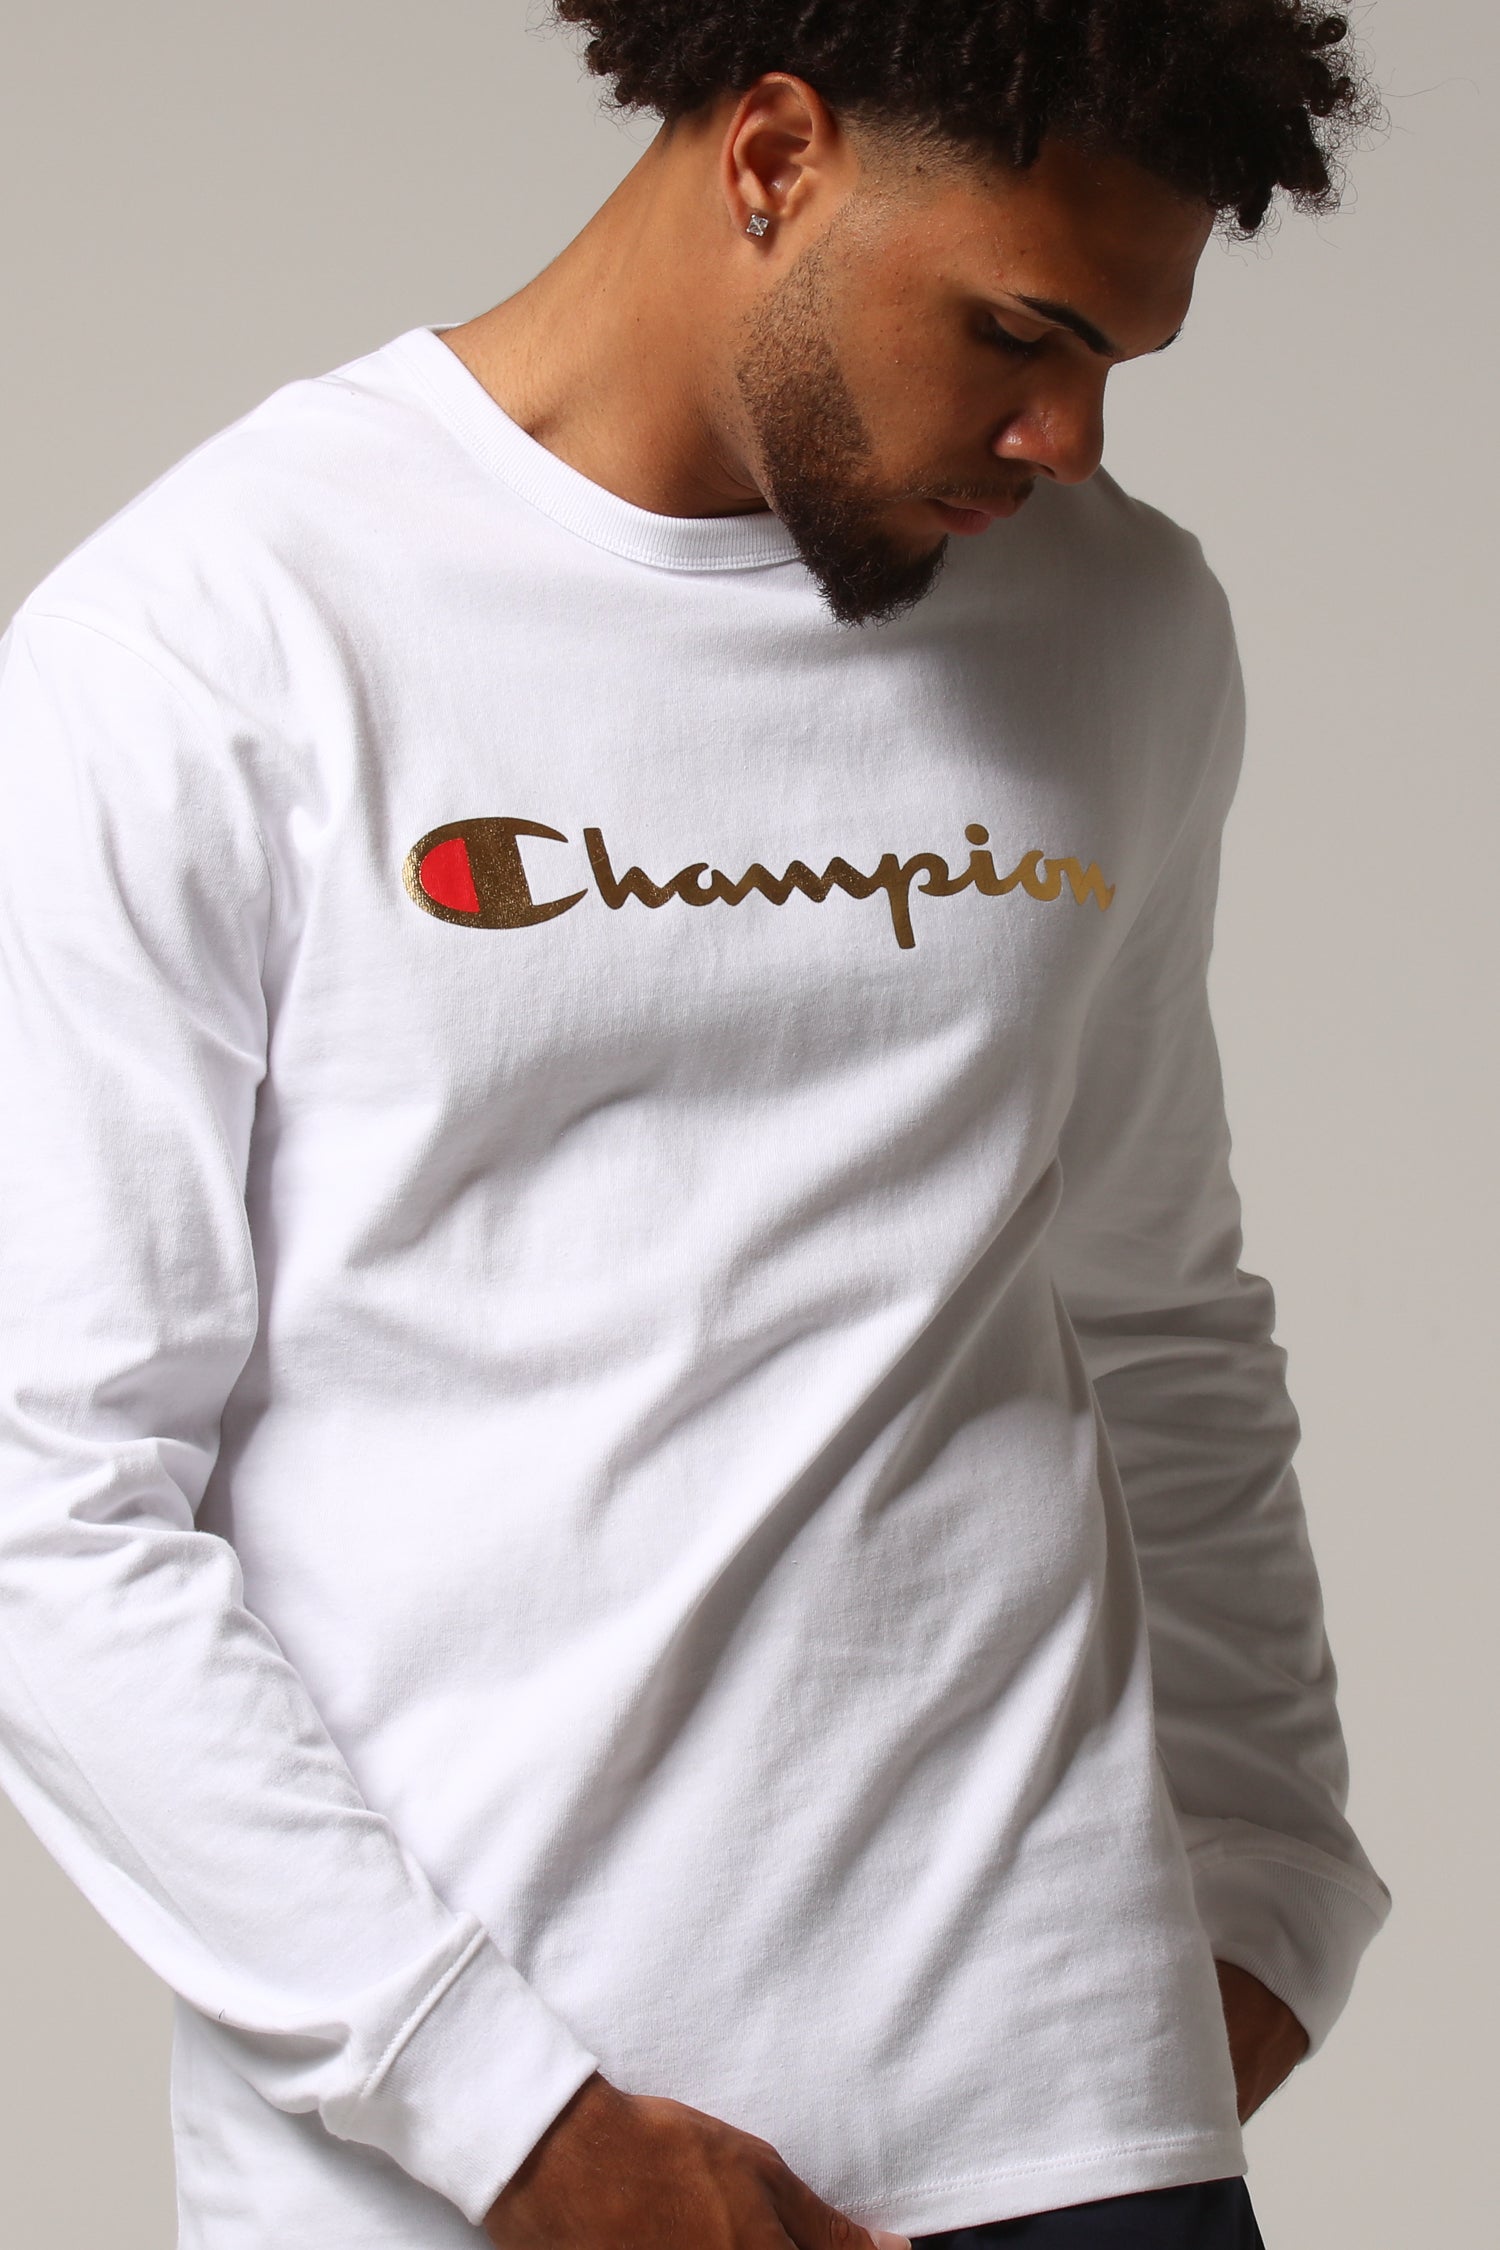 champion gold and white shirt